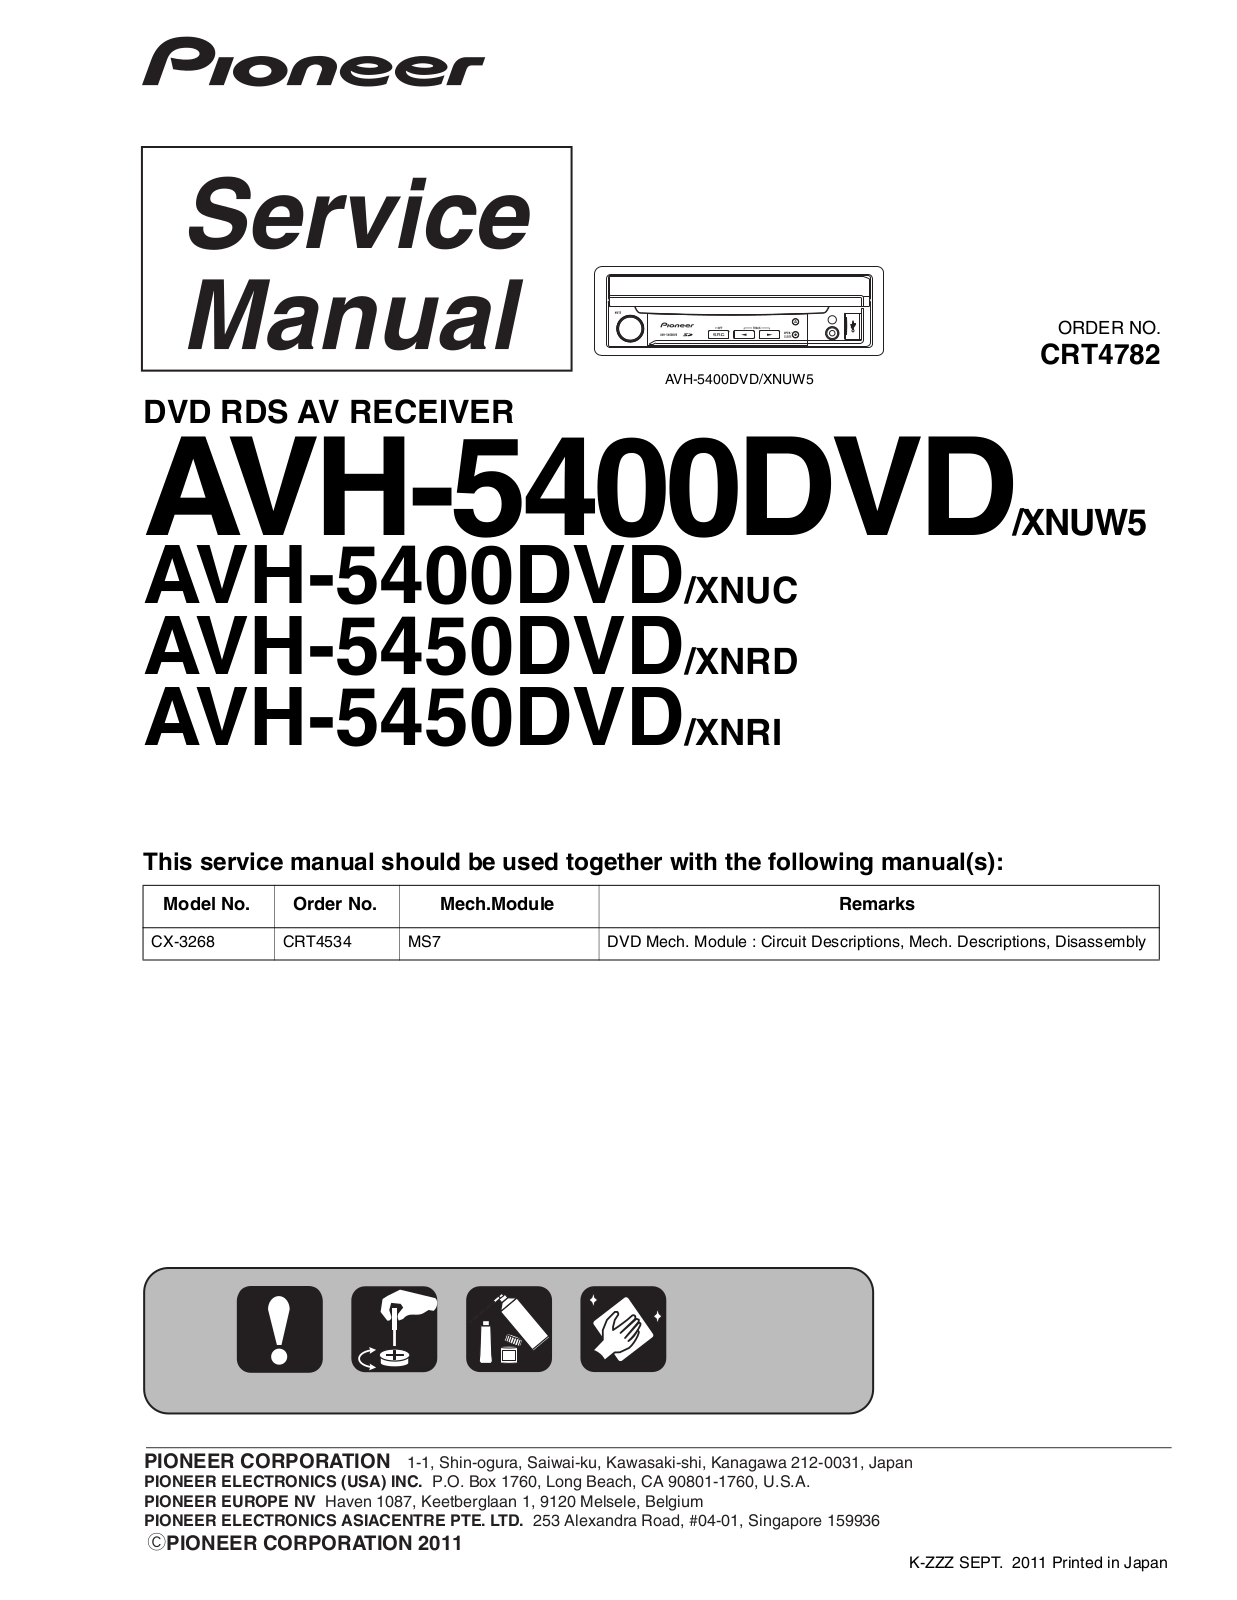 Pioneer AVH-5400DVD Service manual